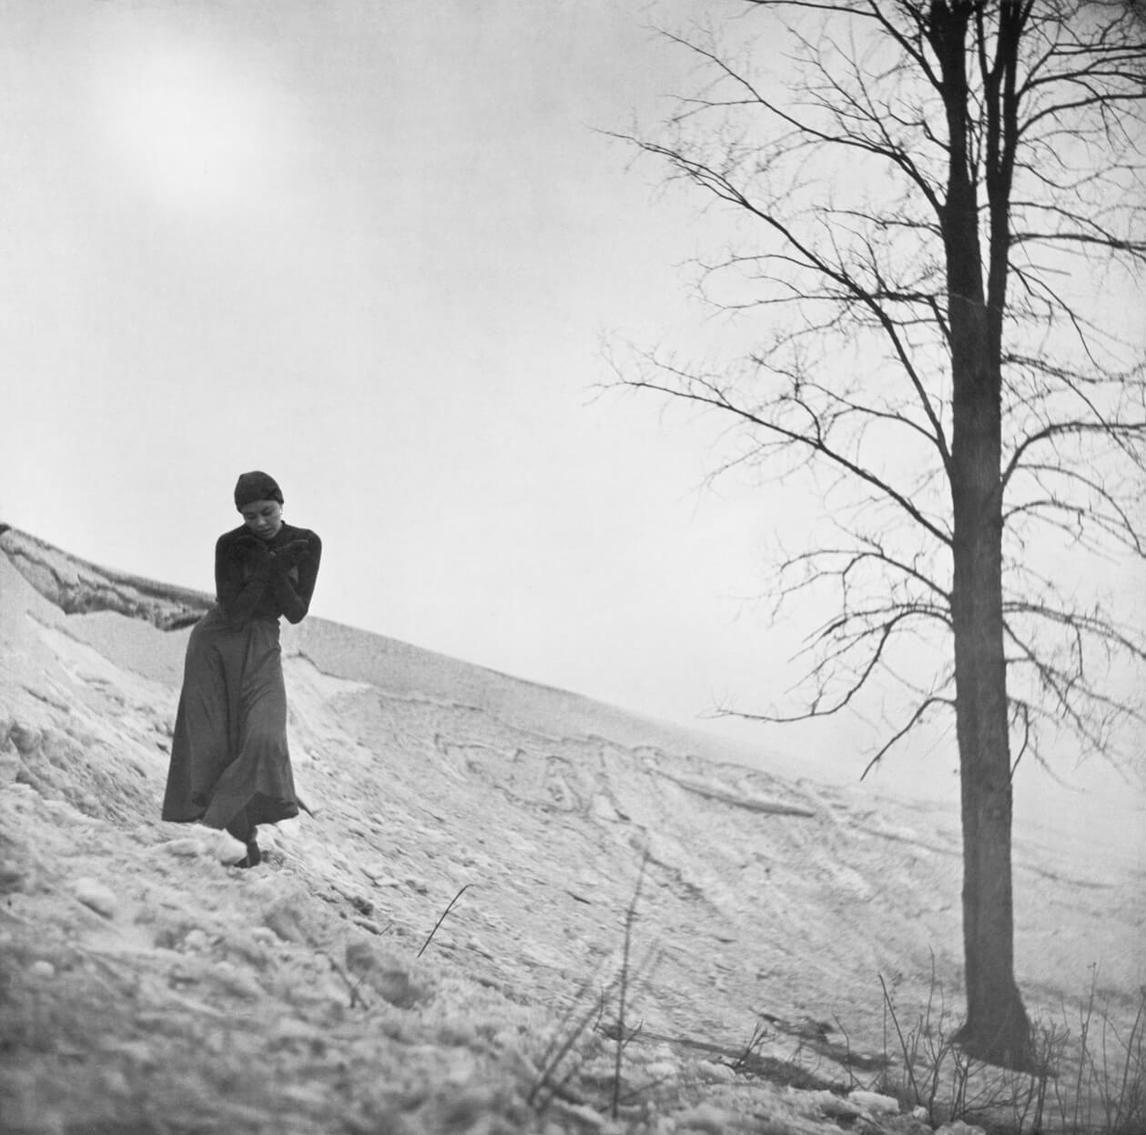 Dance in the Snow, 1948, by Françoise Sullivan.